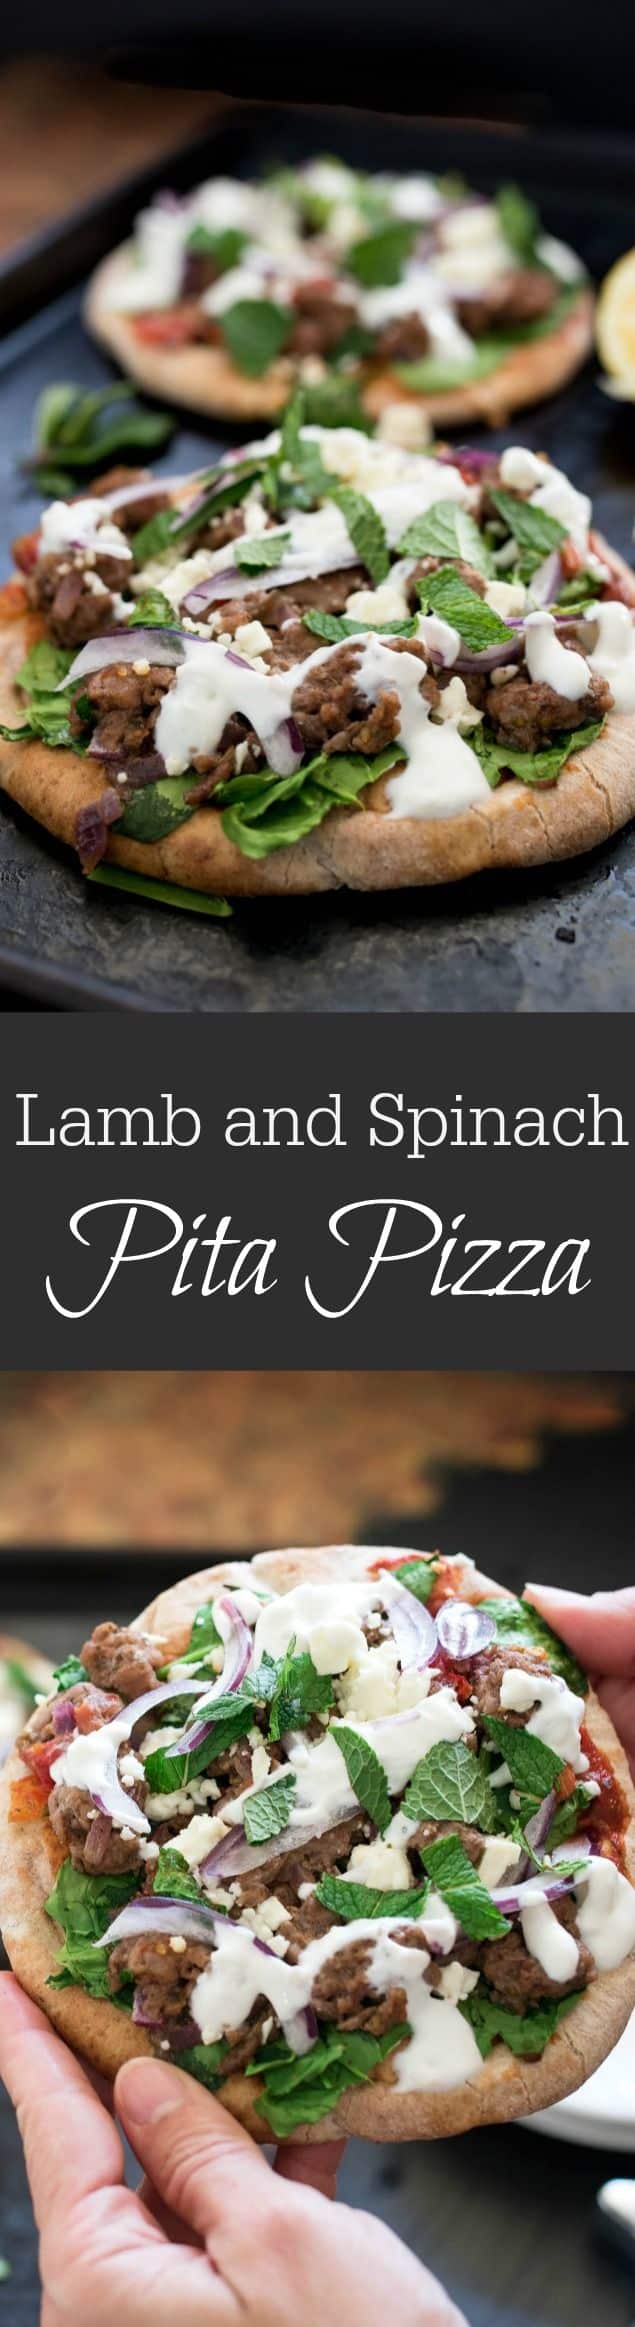 Lamb and spinach pita pizza